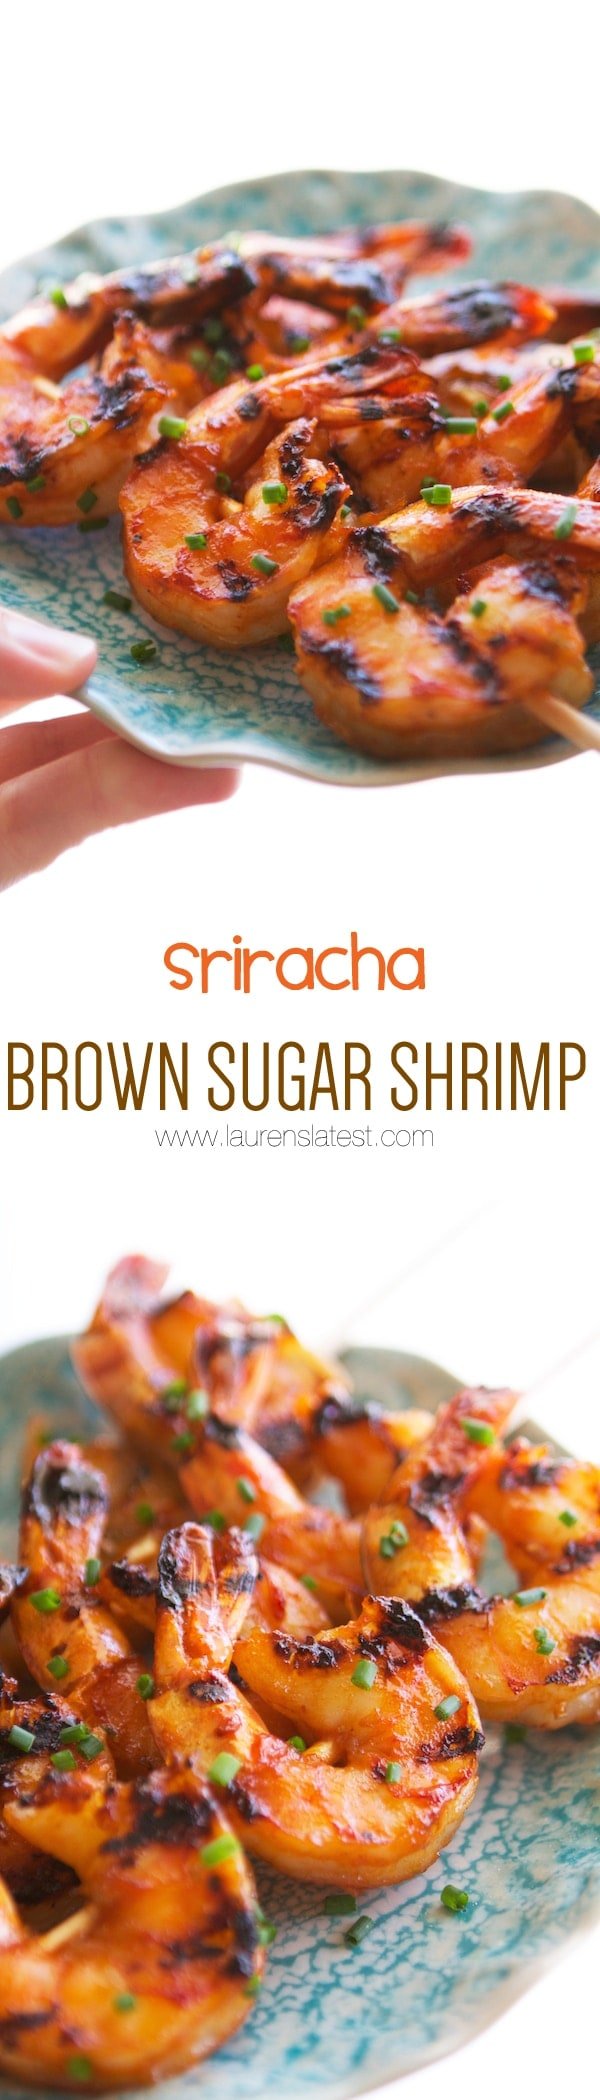 sriracha brown sugar shrimp collage